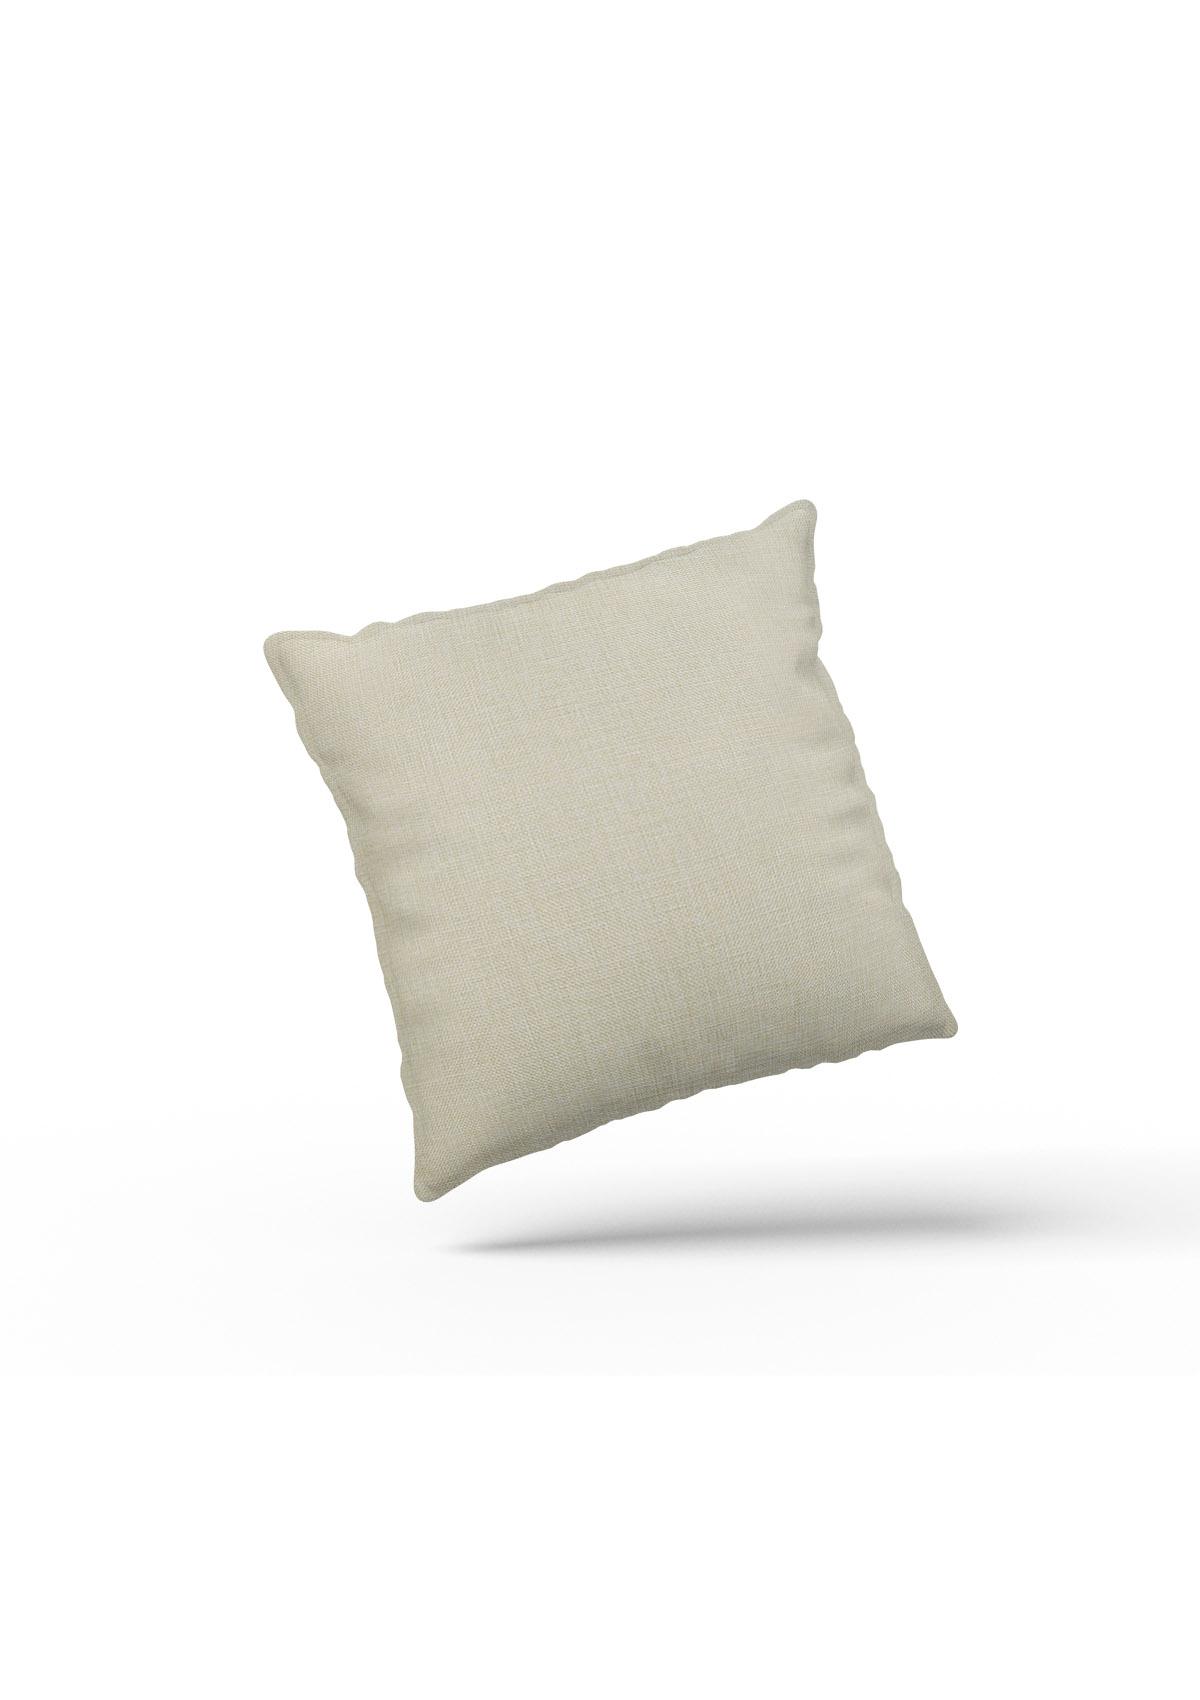 Black White and Grey "Modern" Cushion Covers